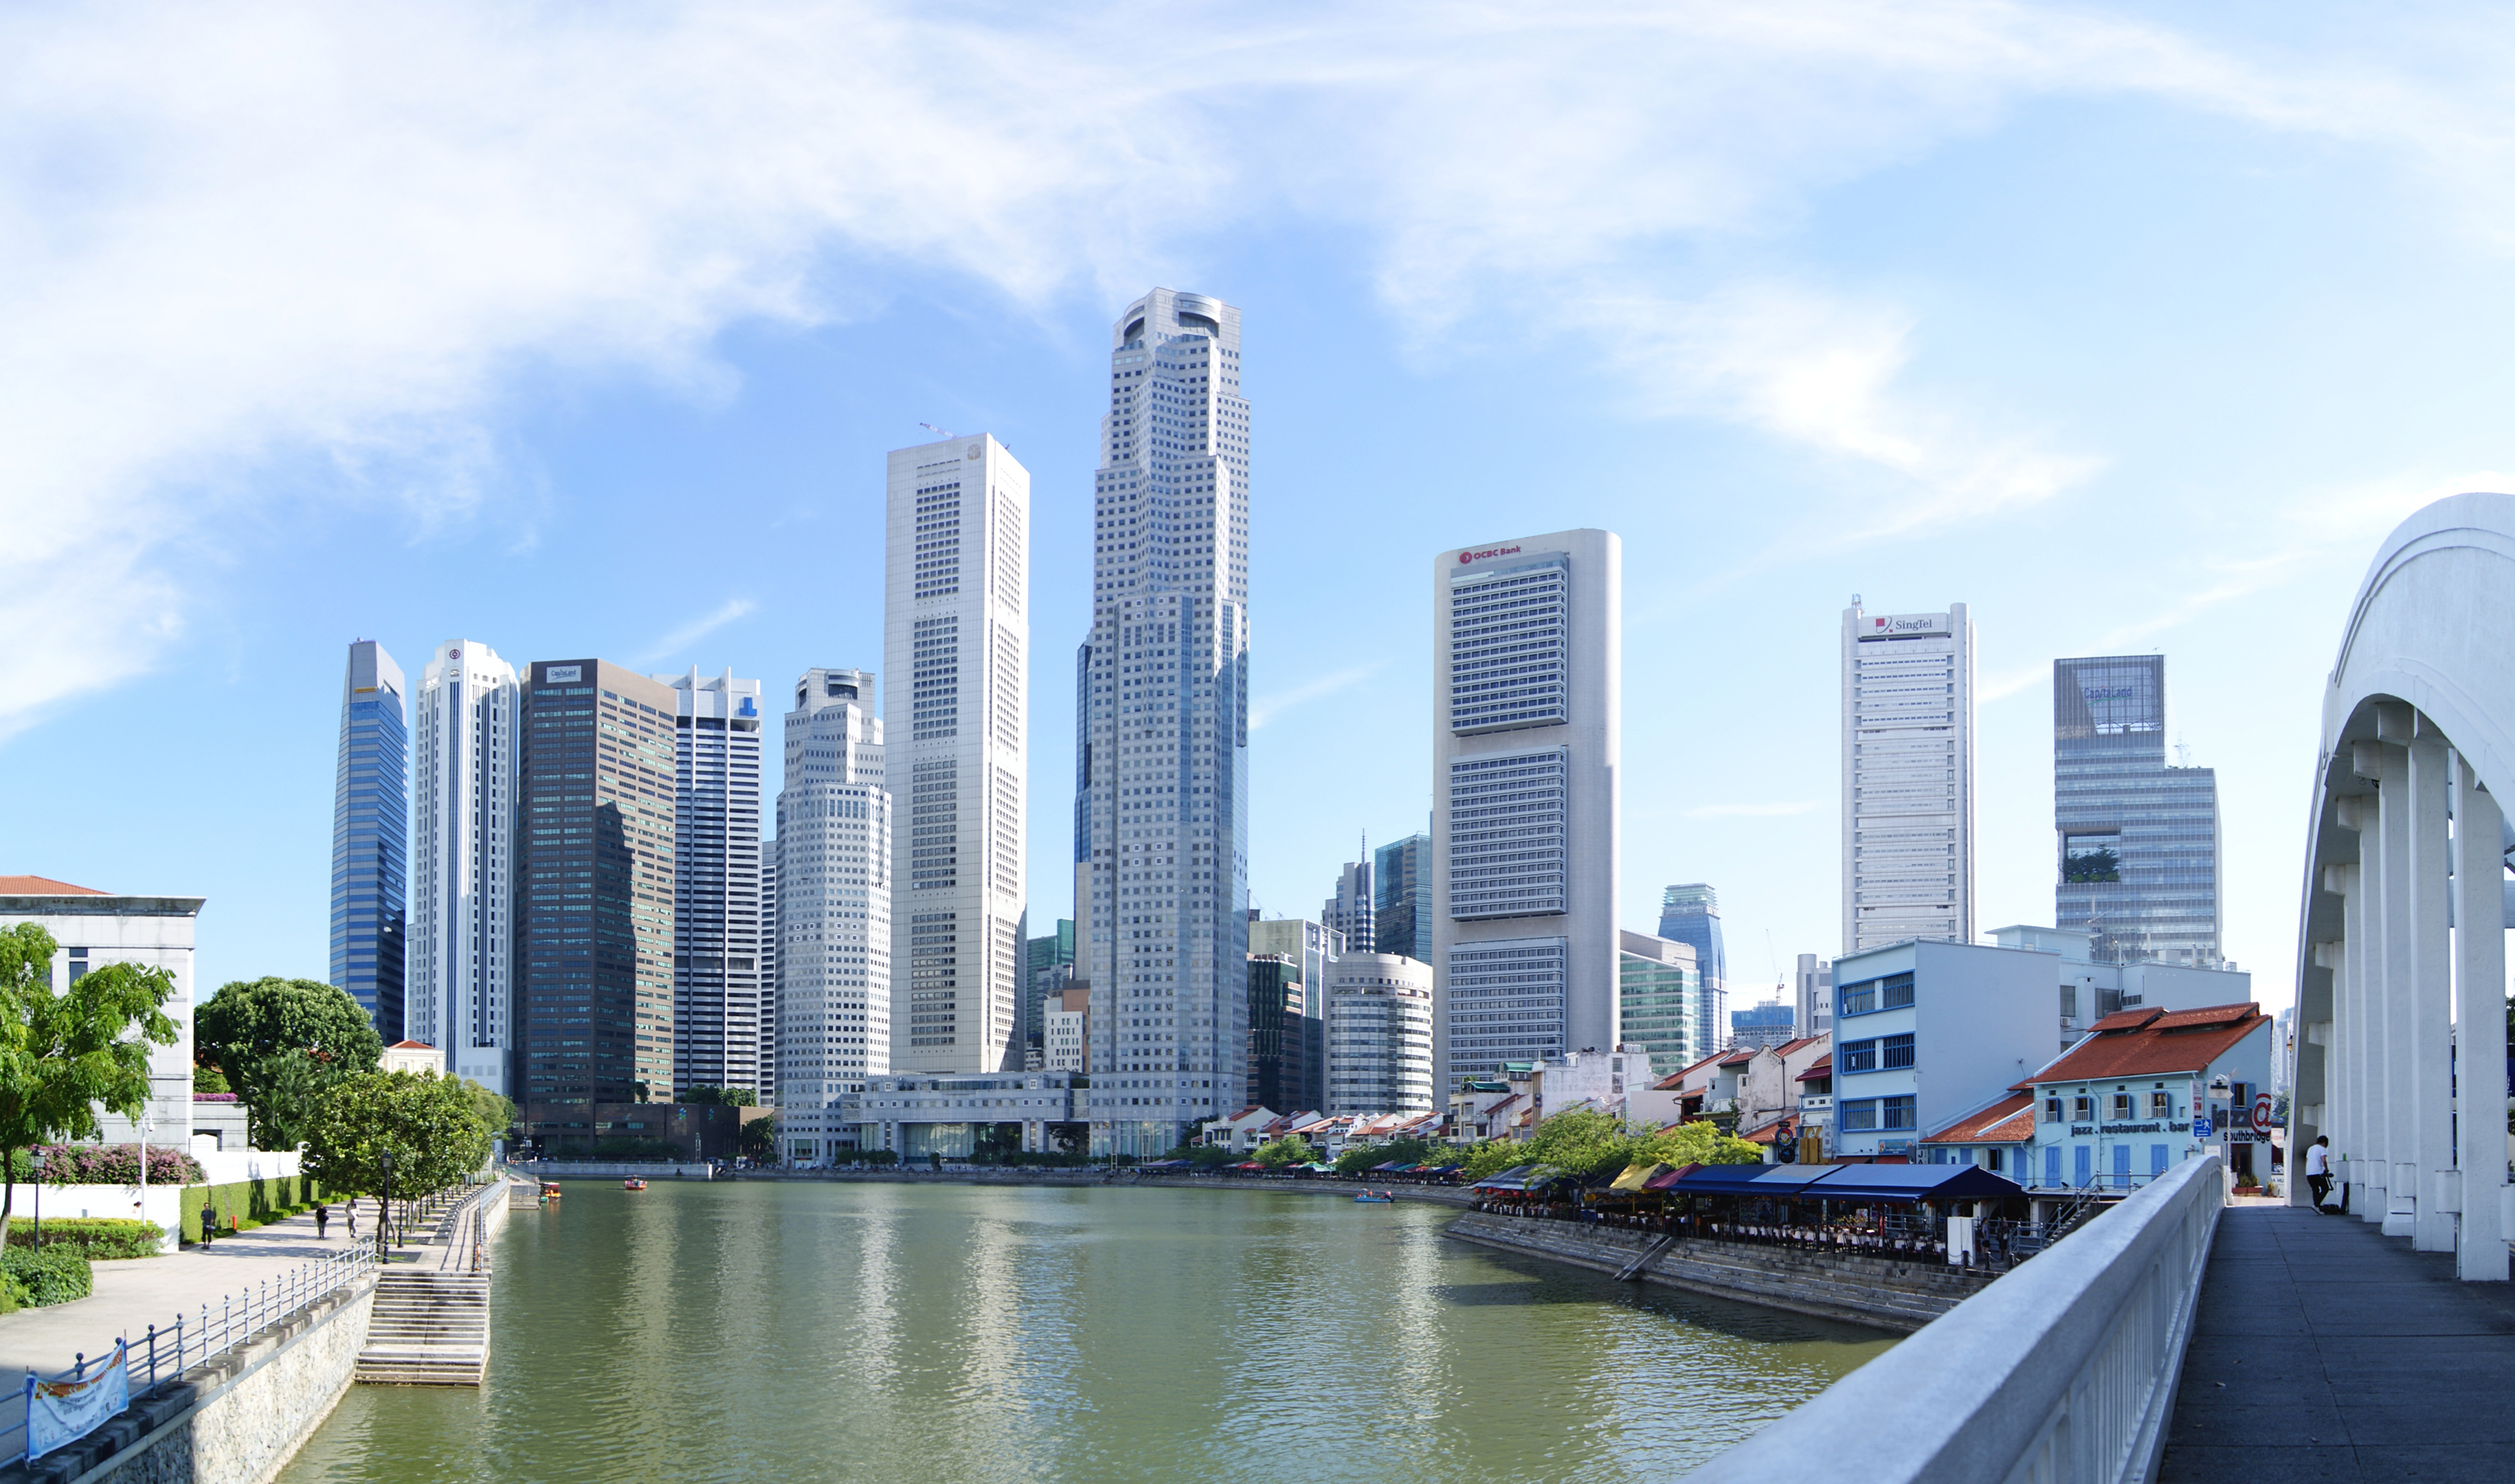 File:Skyscrapers near Singapore River.jpg - Wikimedia Commons